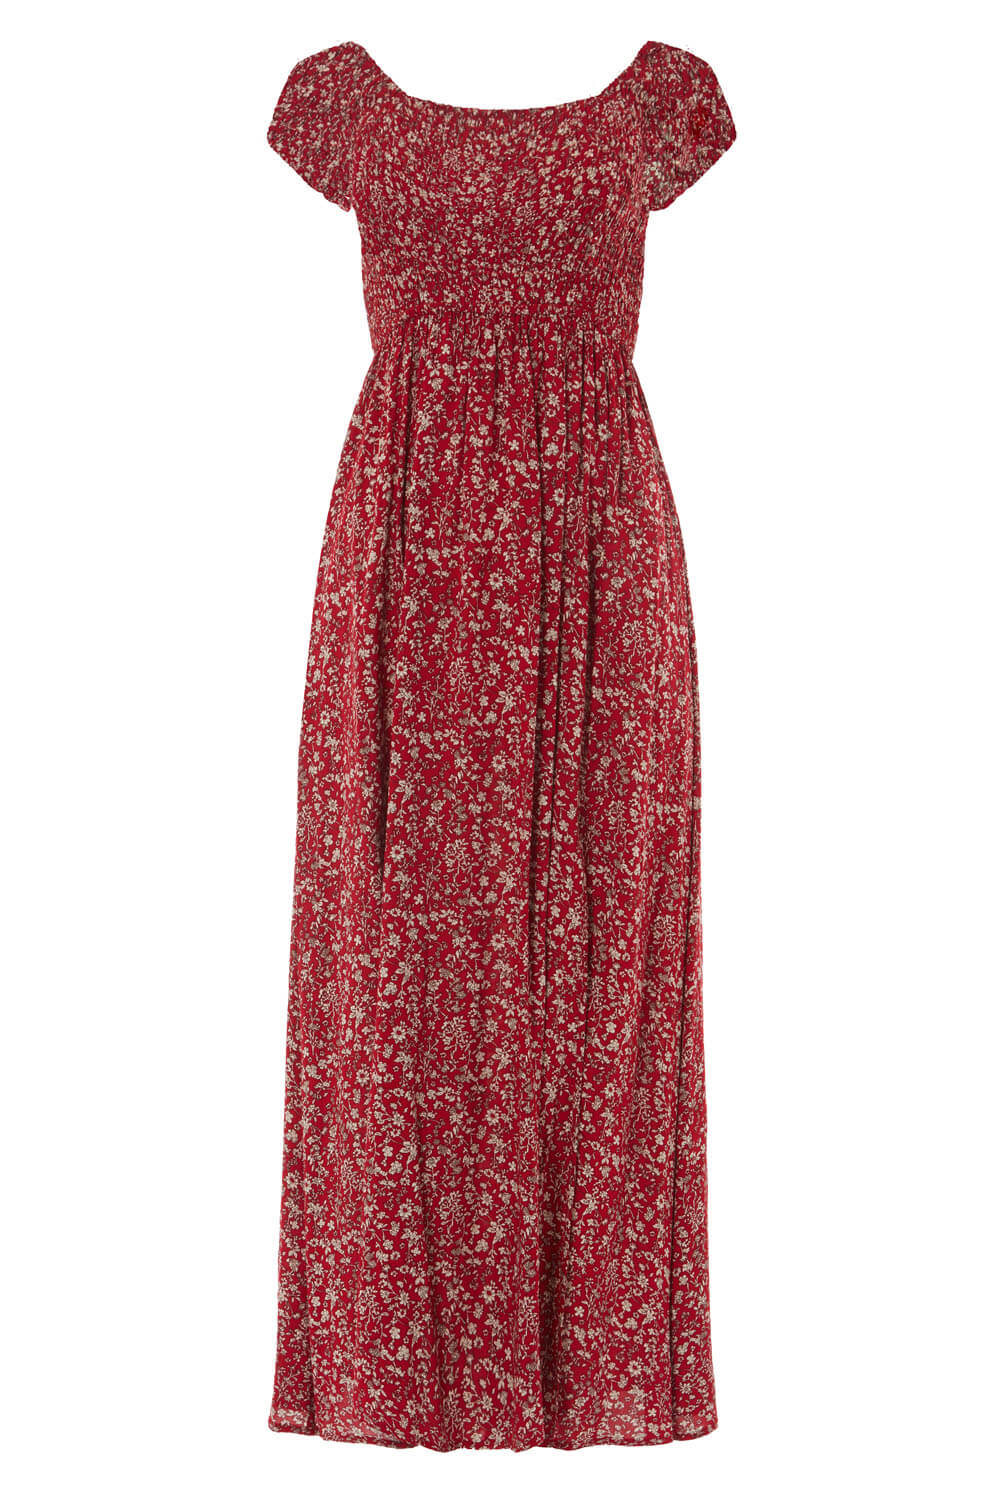 Red Floral Shirred Bardot Maxi Dress, Image 6 of 6